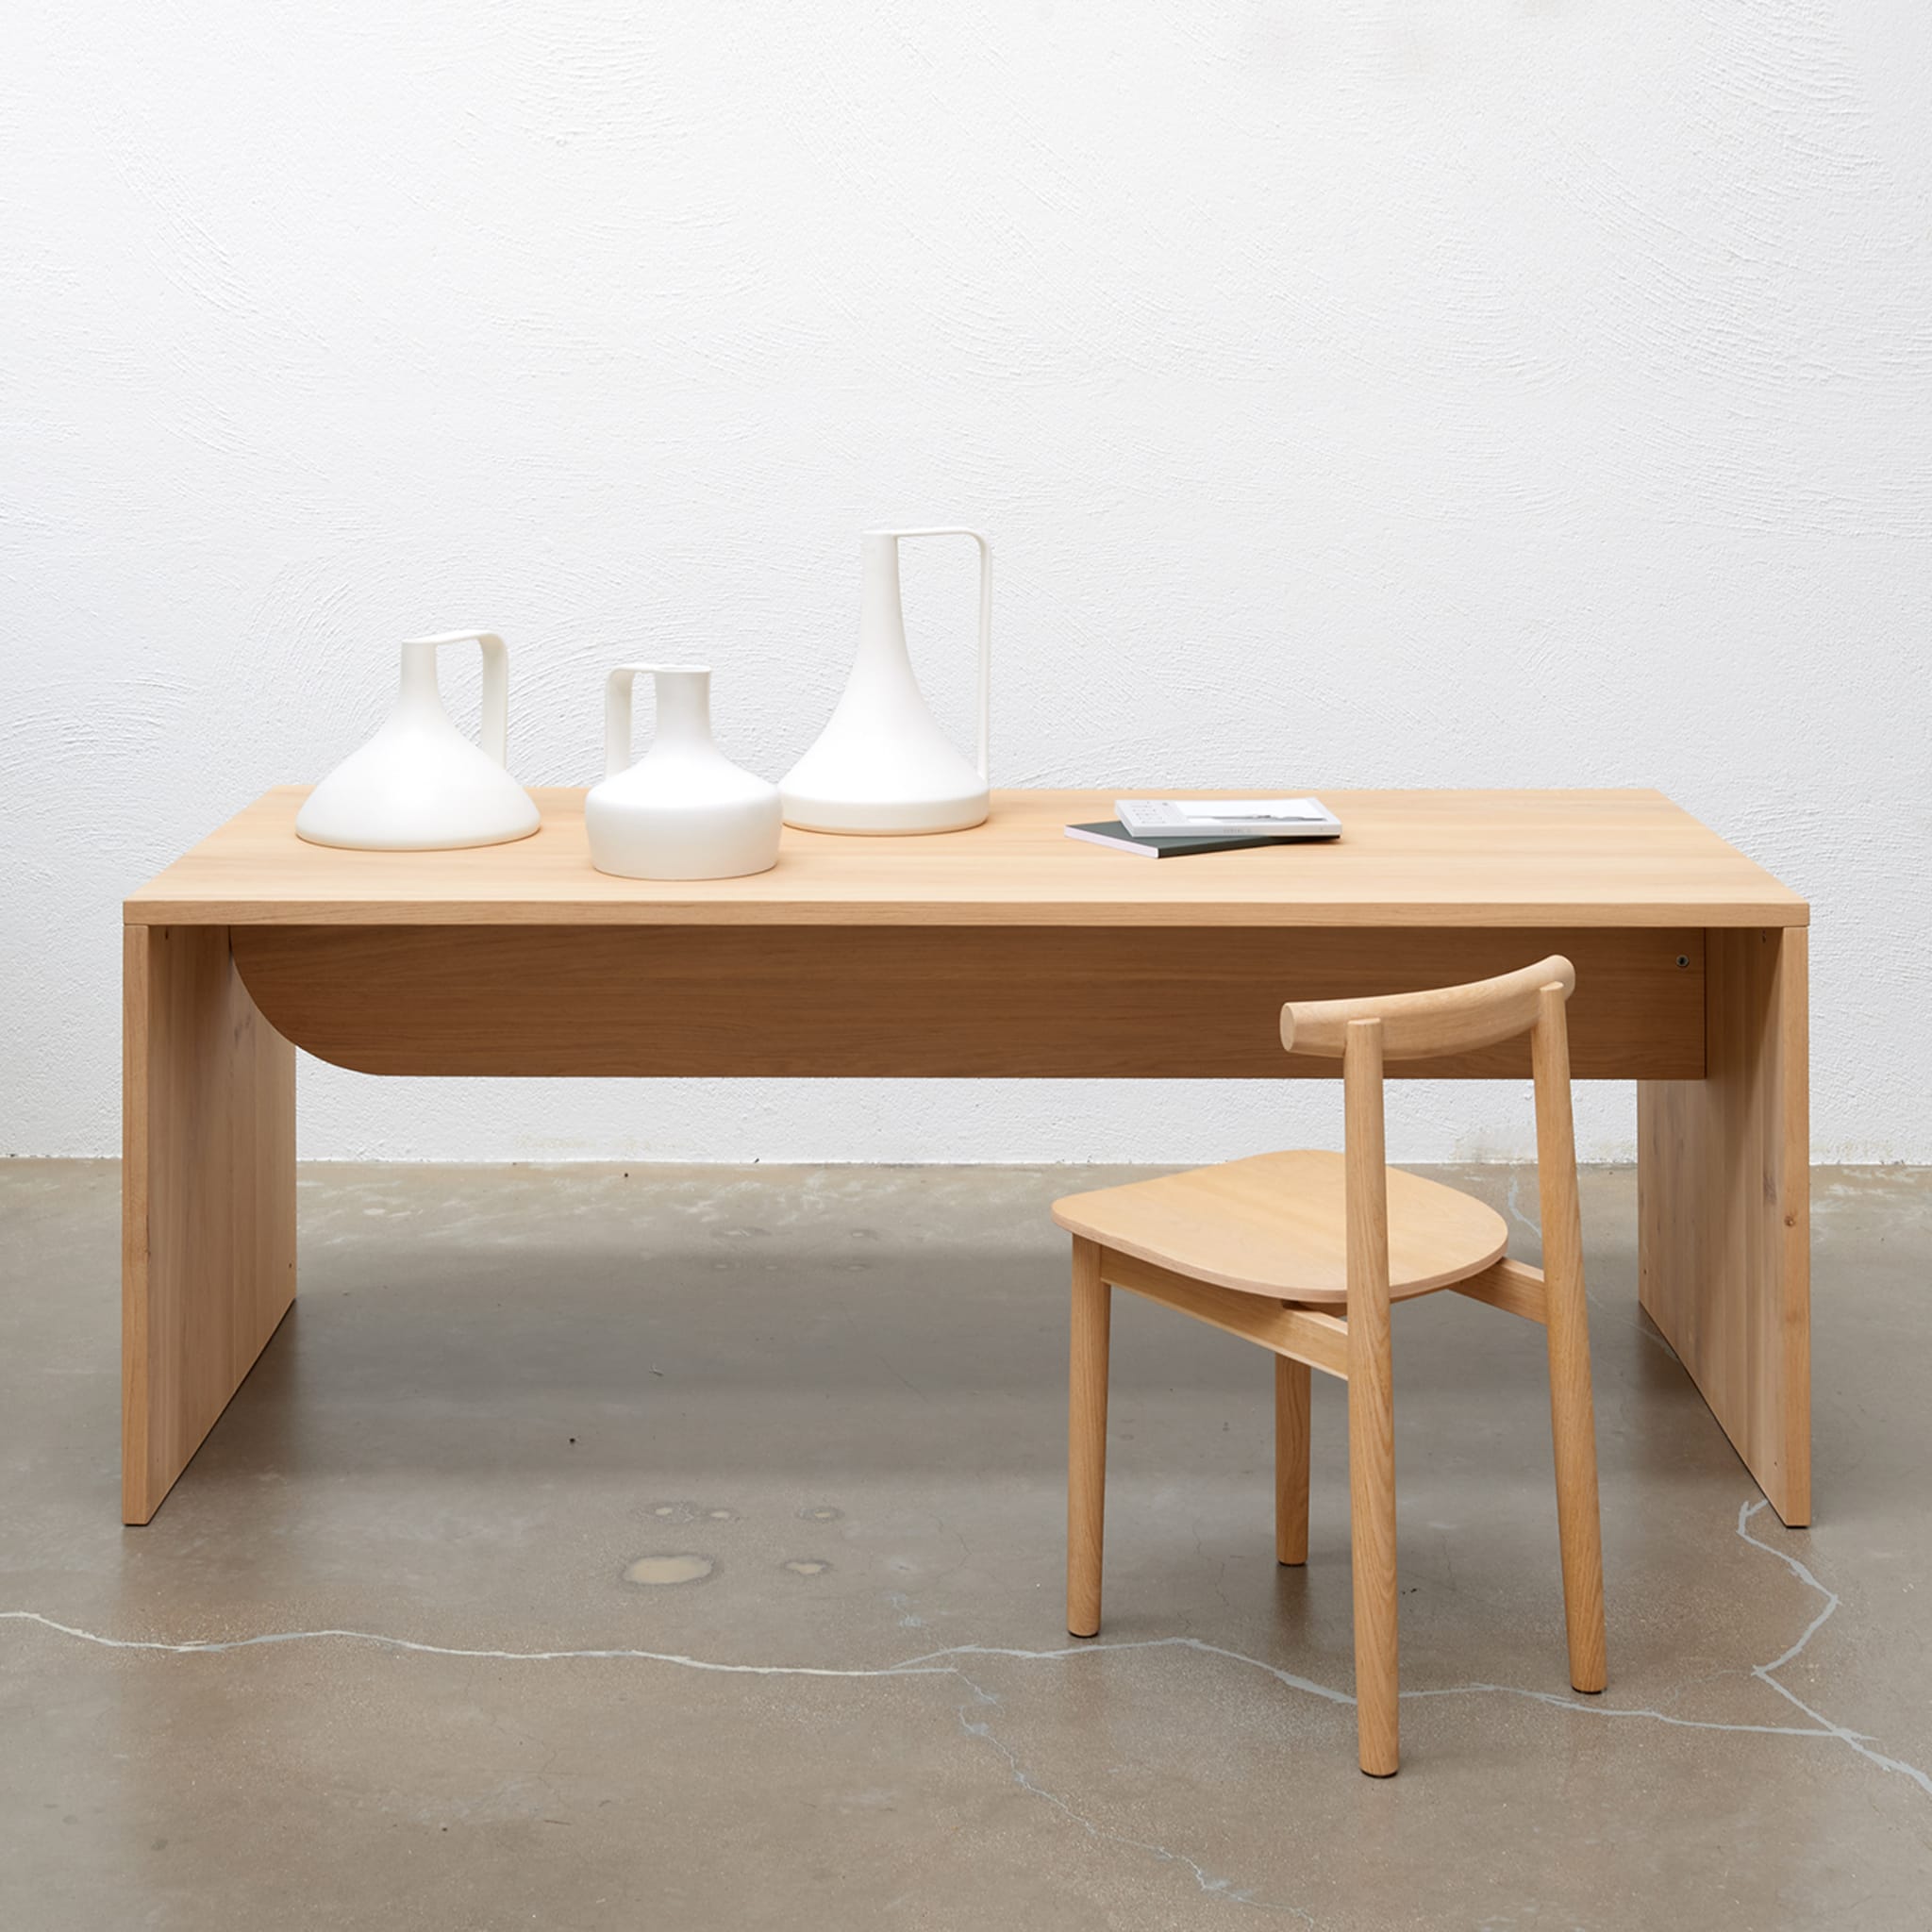 Iperbole Oak Table by Federico Angi - Alternative view 2